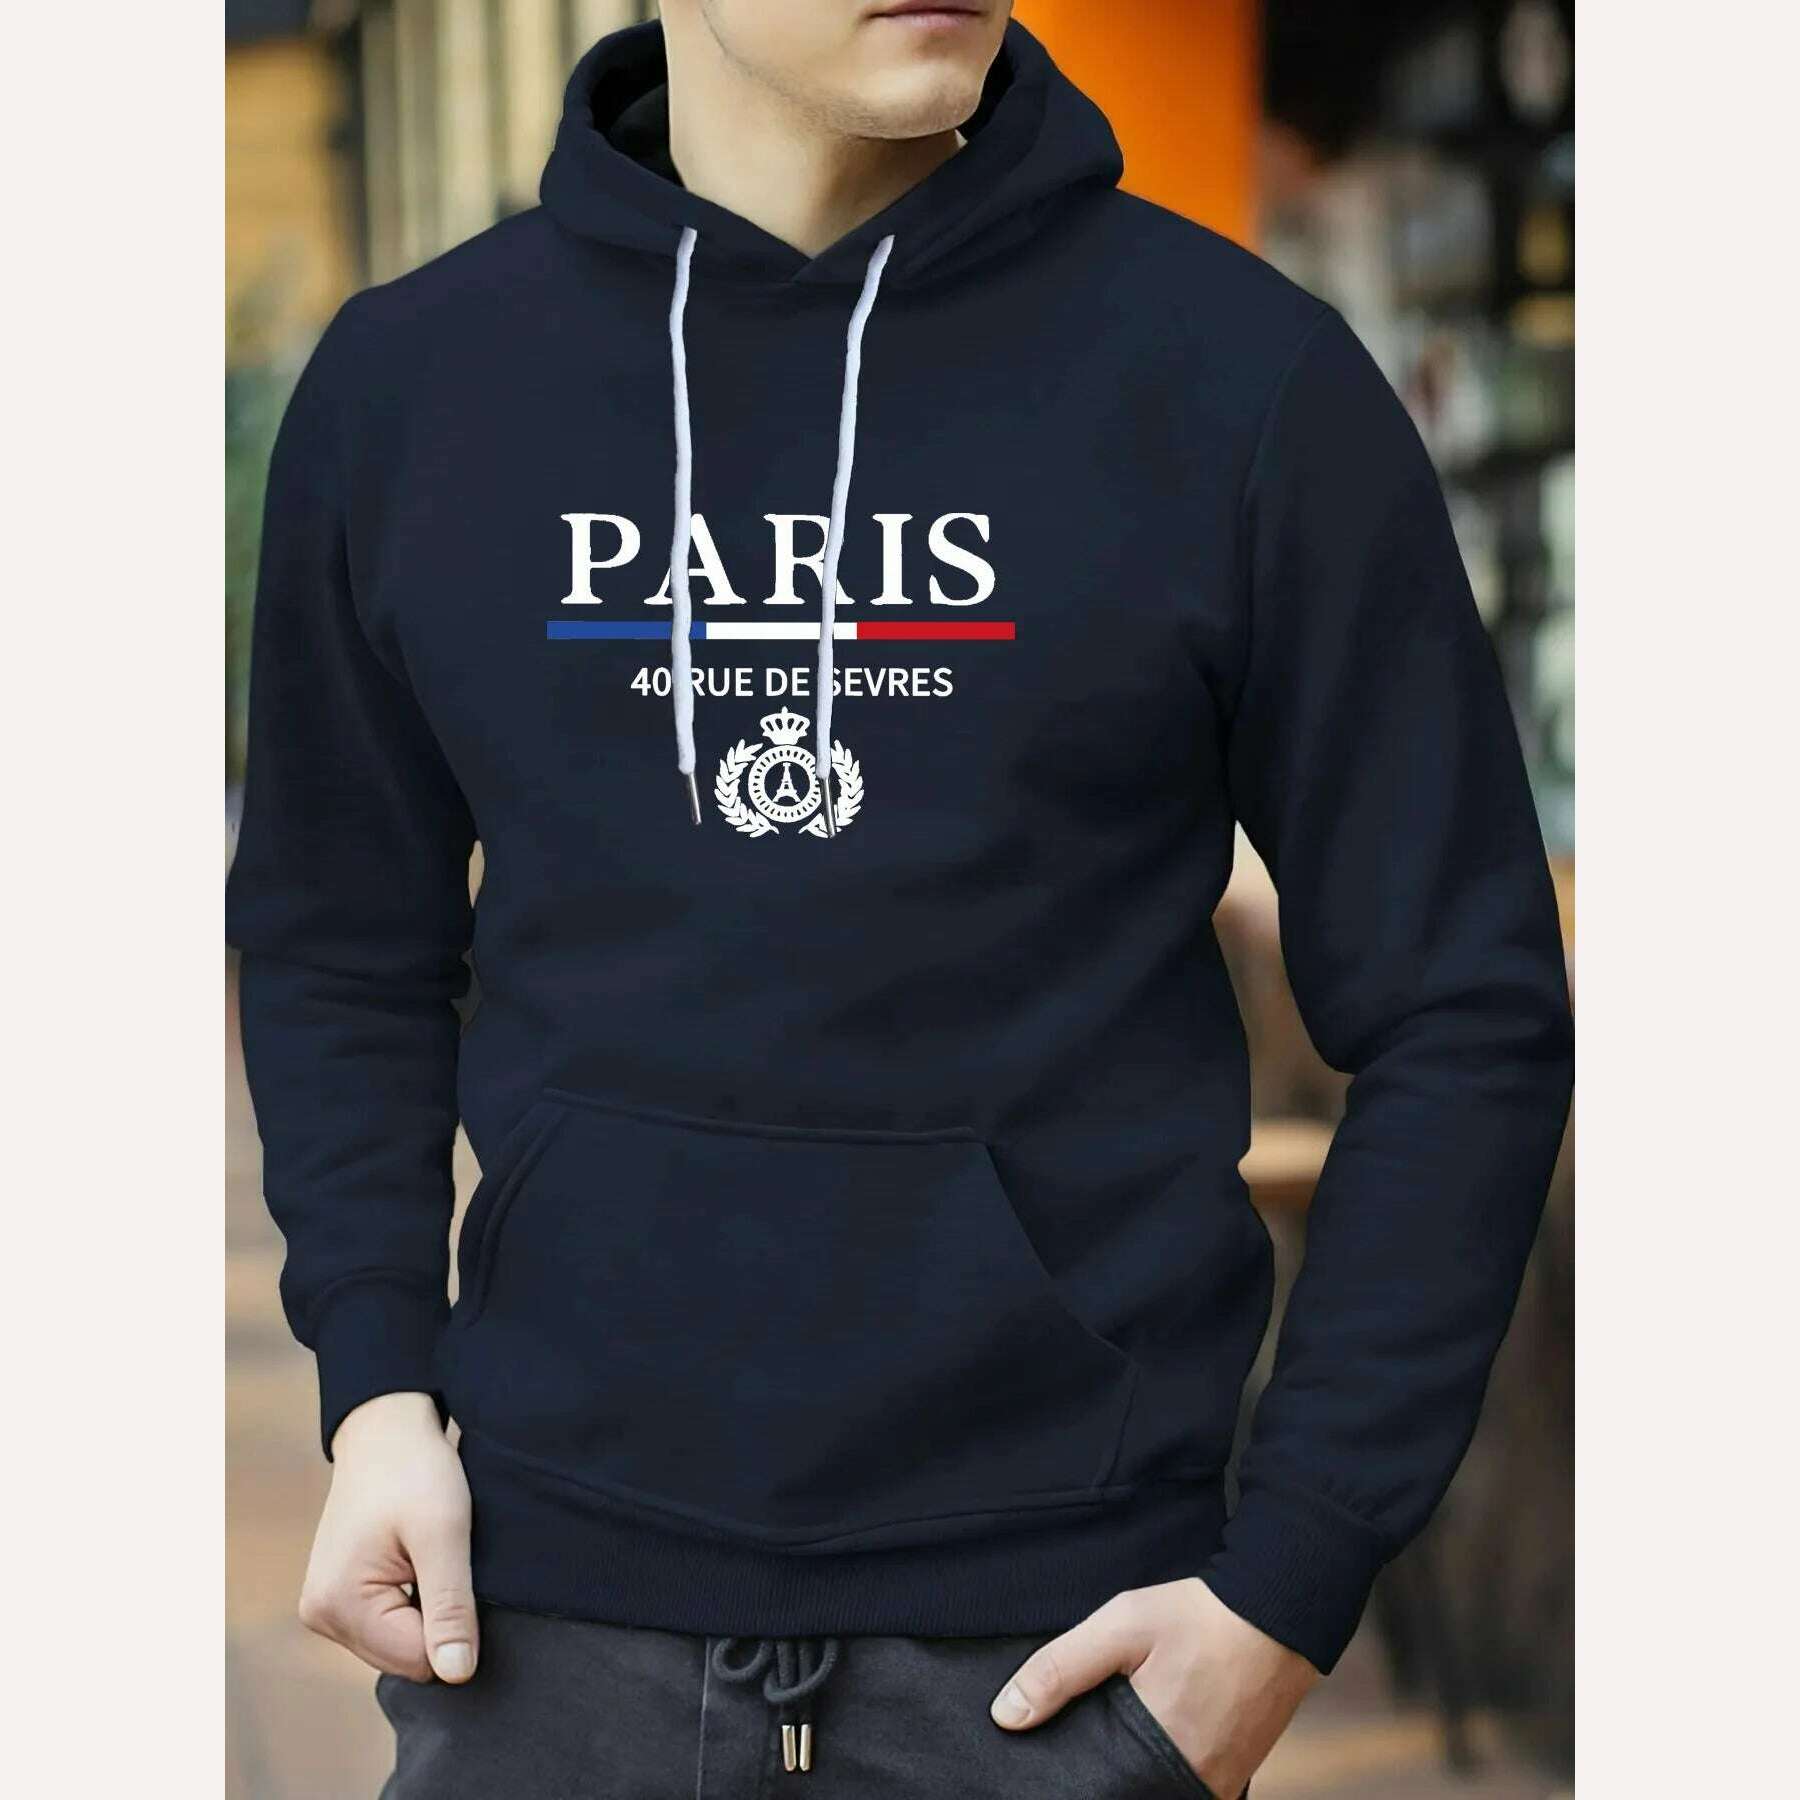 KIMLUD, Men's Autumn Winter Hooded Fashion Sweater Tshirt Tops, A-PARIS-zang qing / XS, KIMLUD Womens Clothes